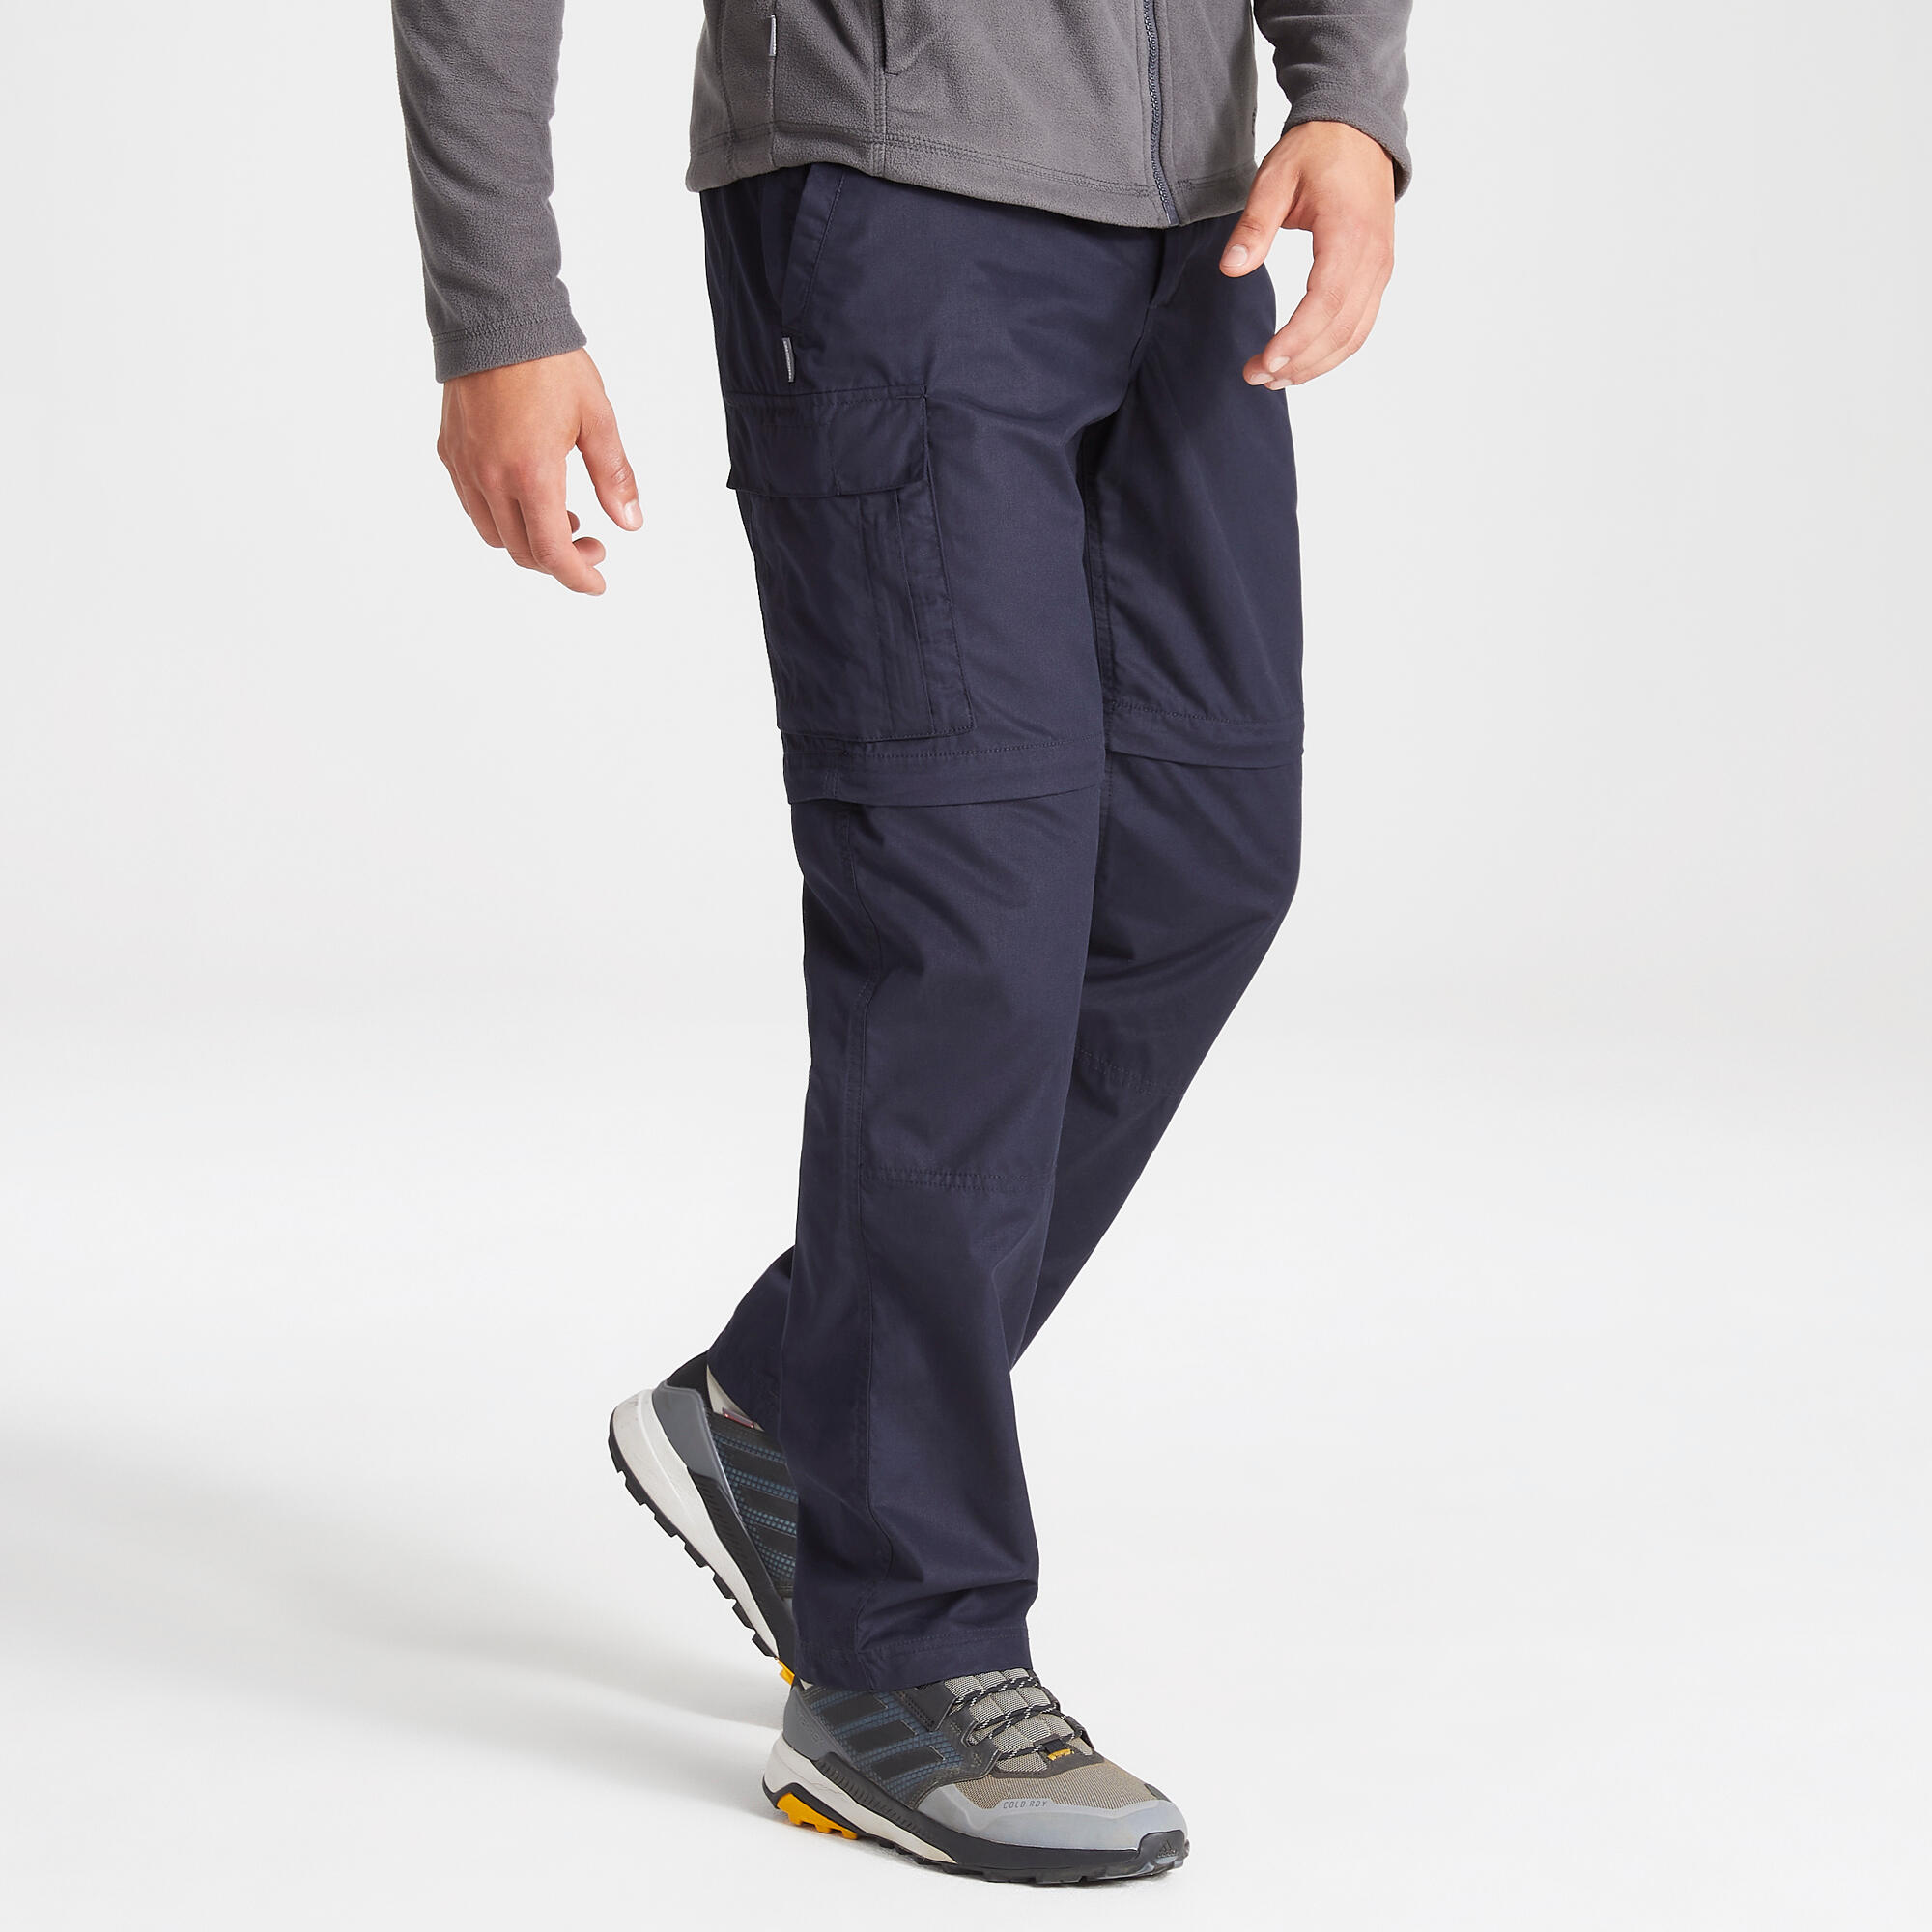 Men's Expert Kiwi Tailored Convertible Trousers 4/5